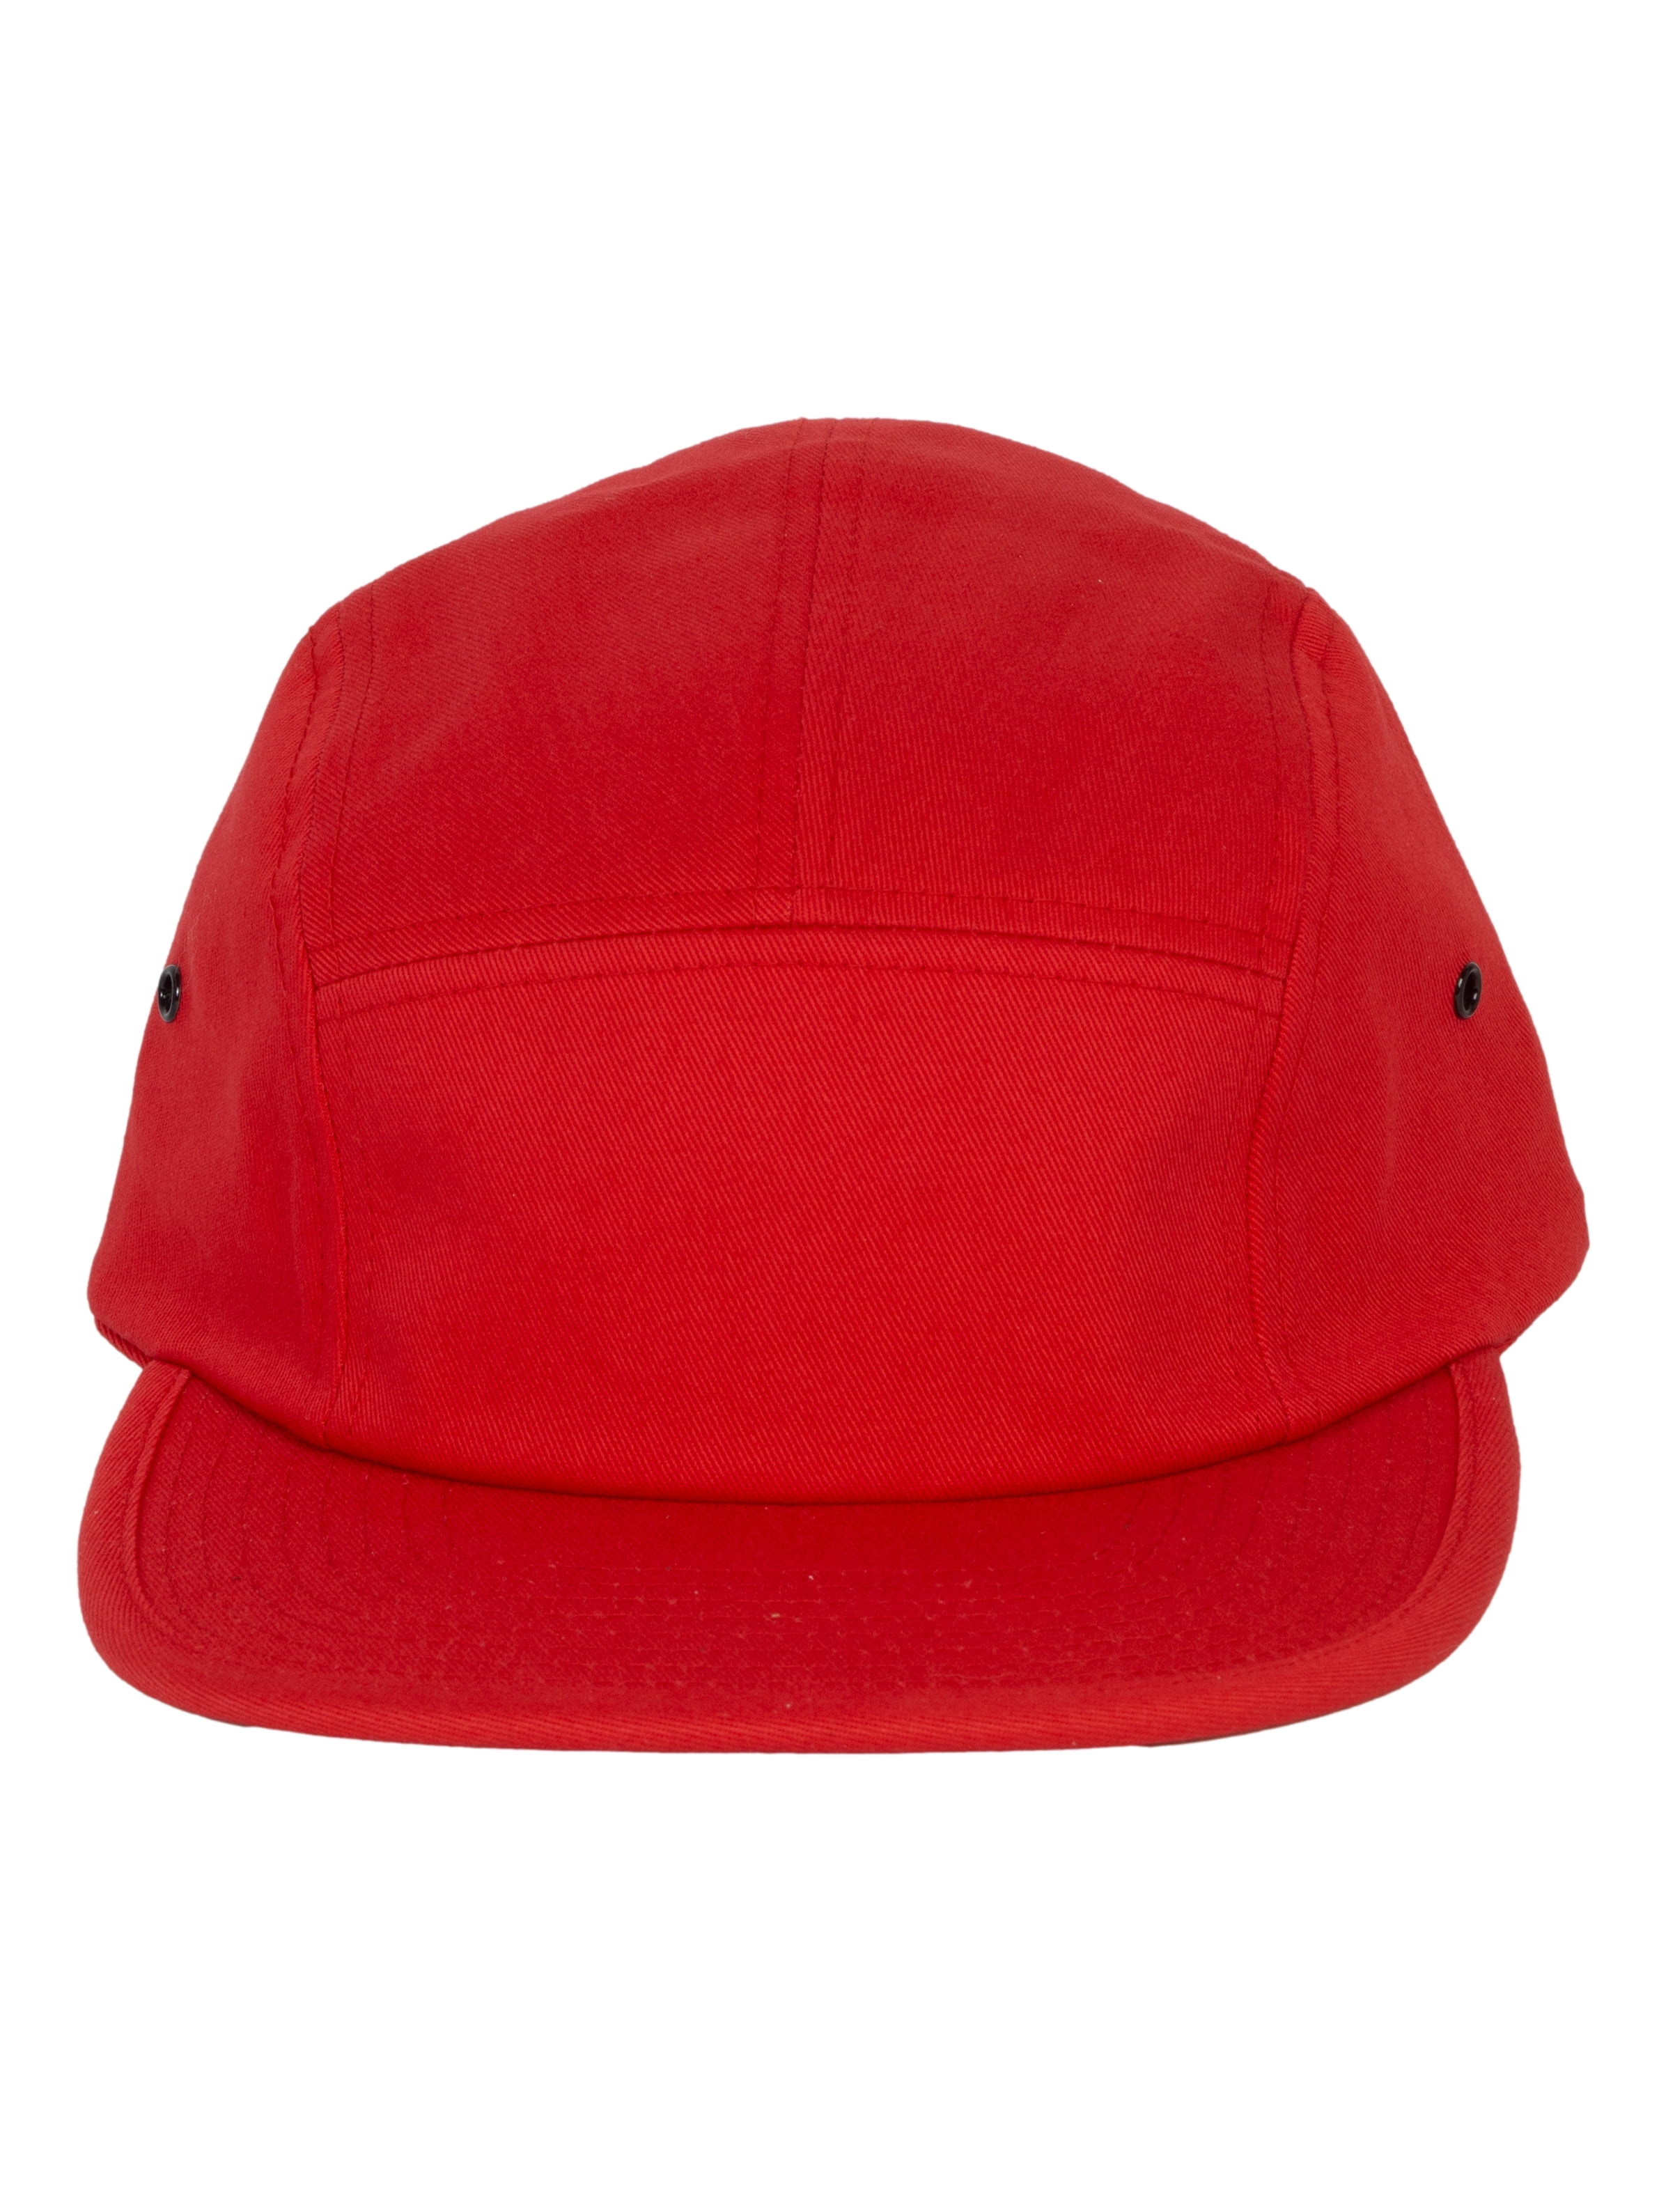 Top Headwear 5 Panel Hat For Men Classic Flat Bill Jockey Baseball Cap Black